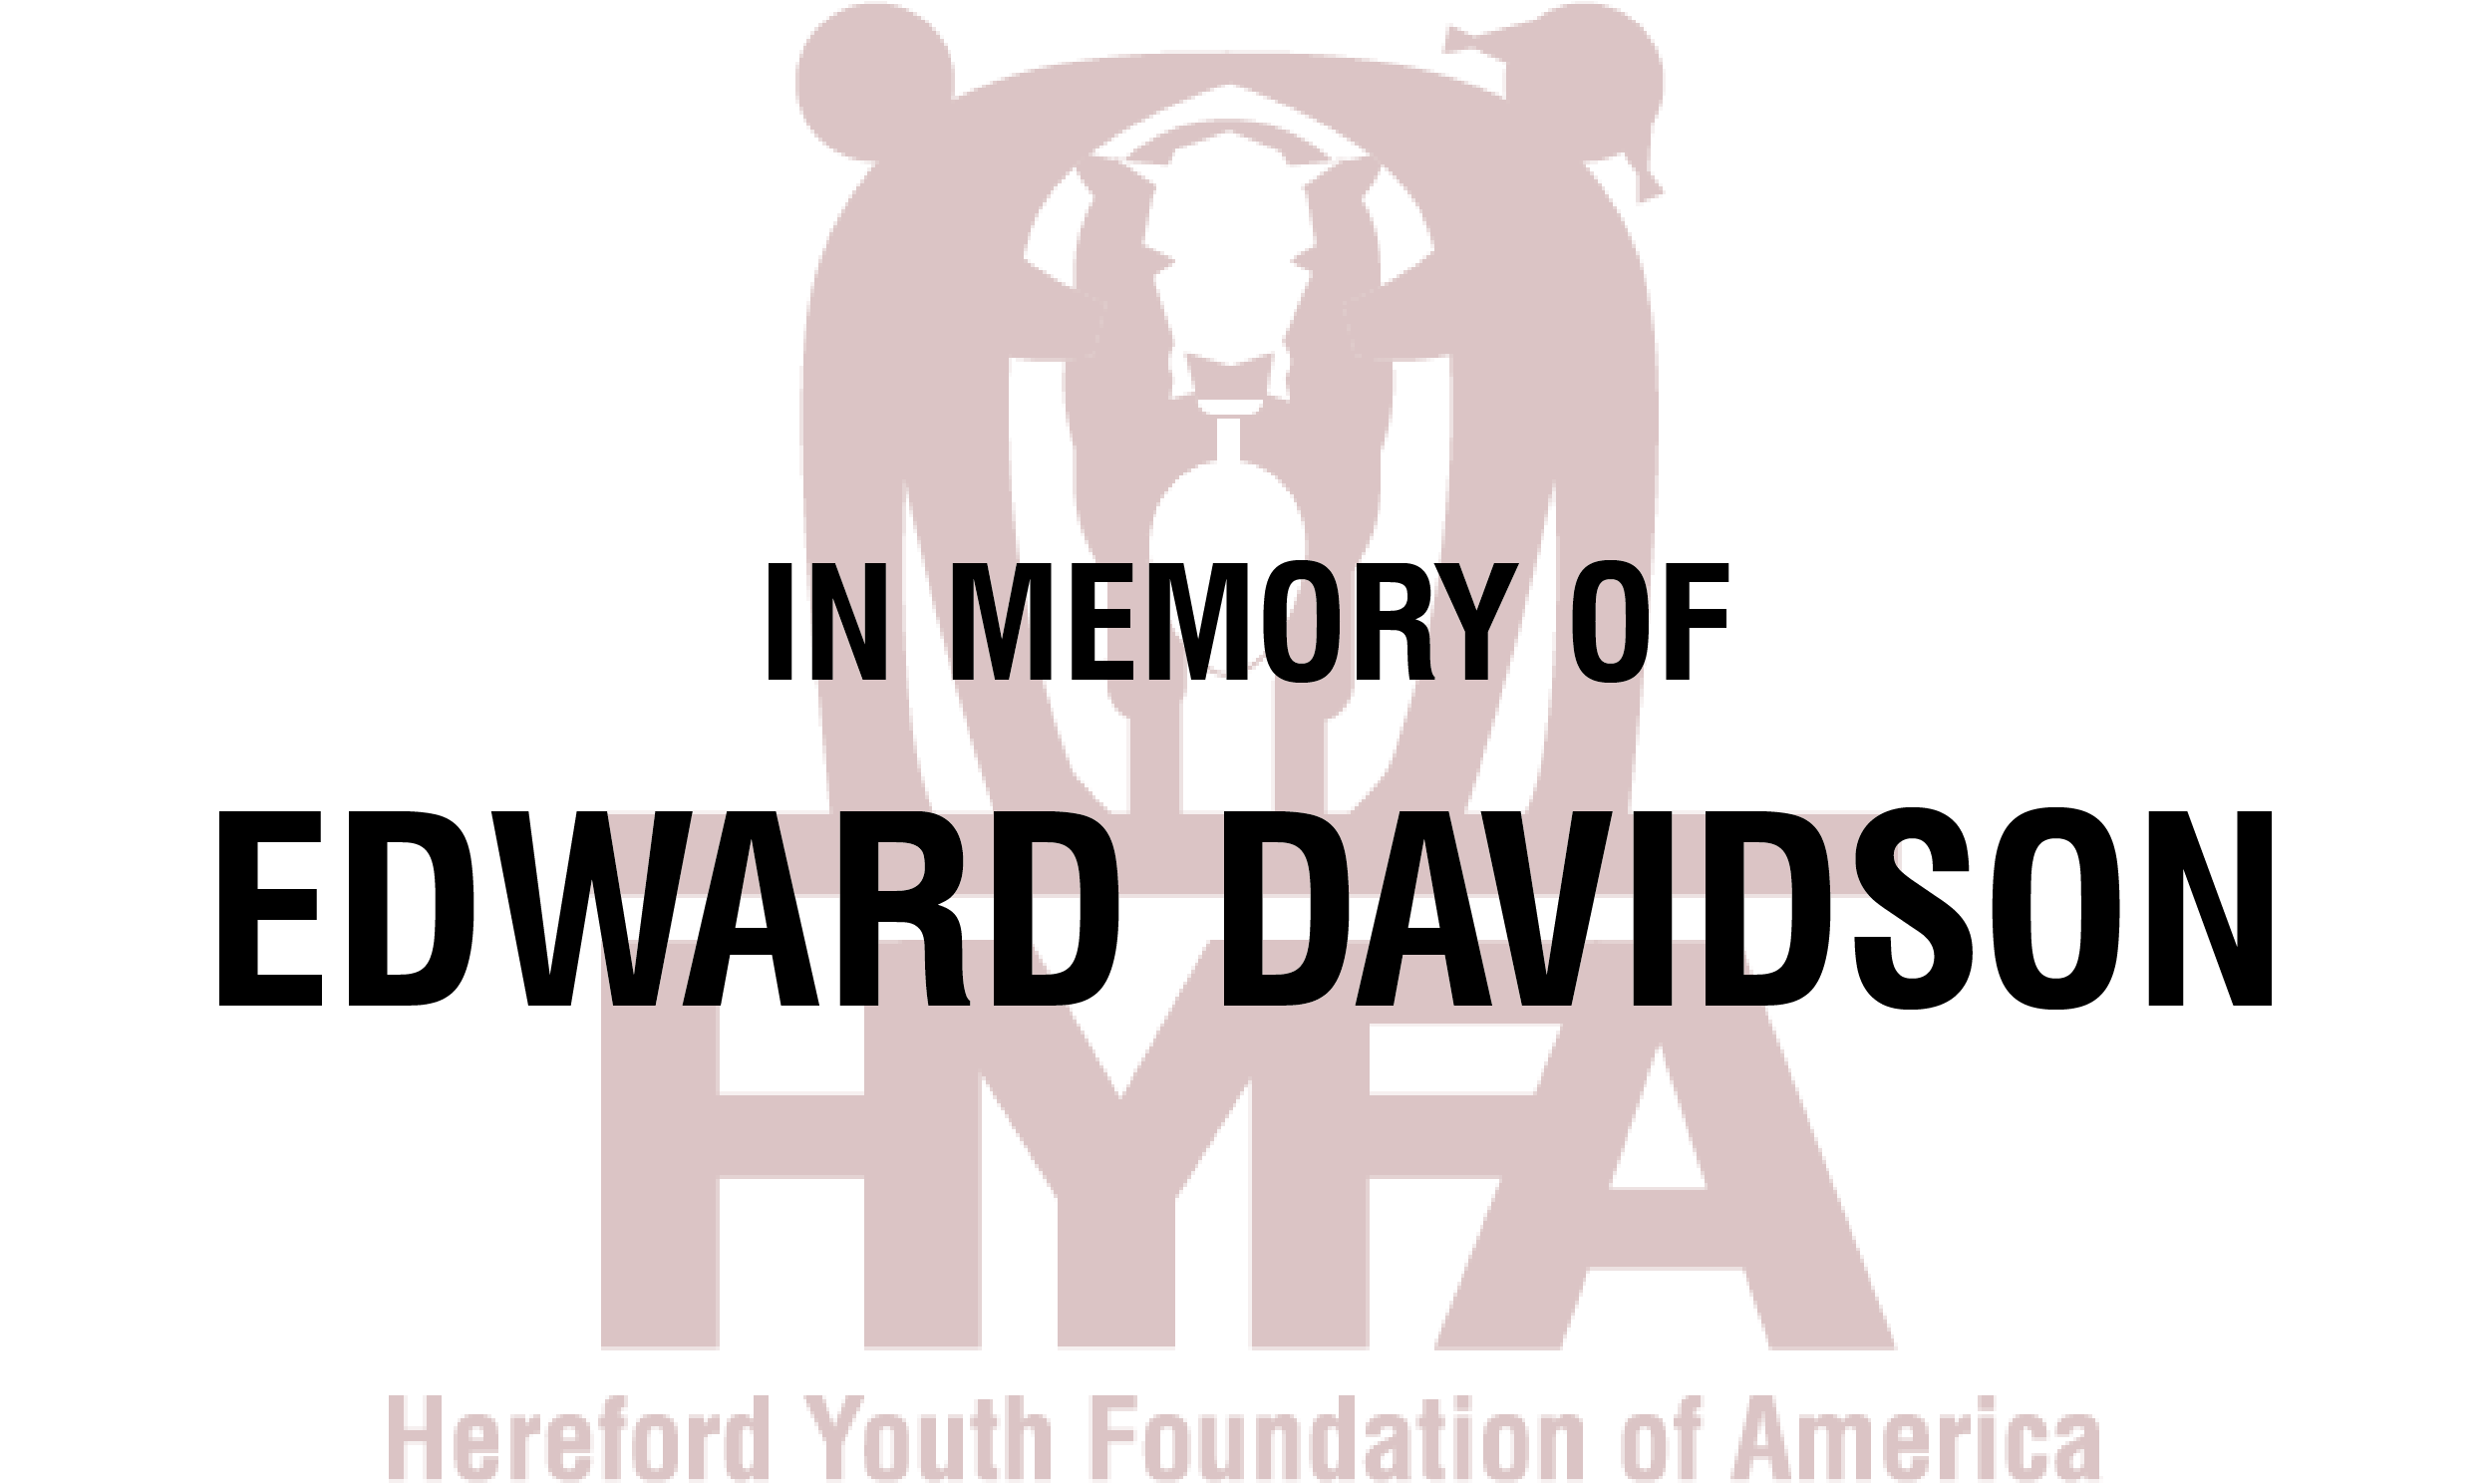 Remembering Edward Davidson